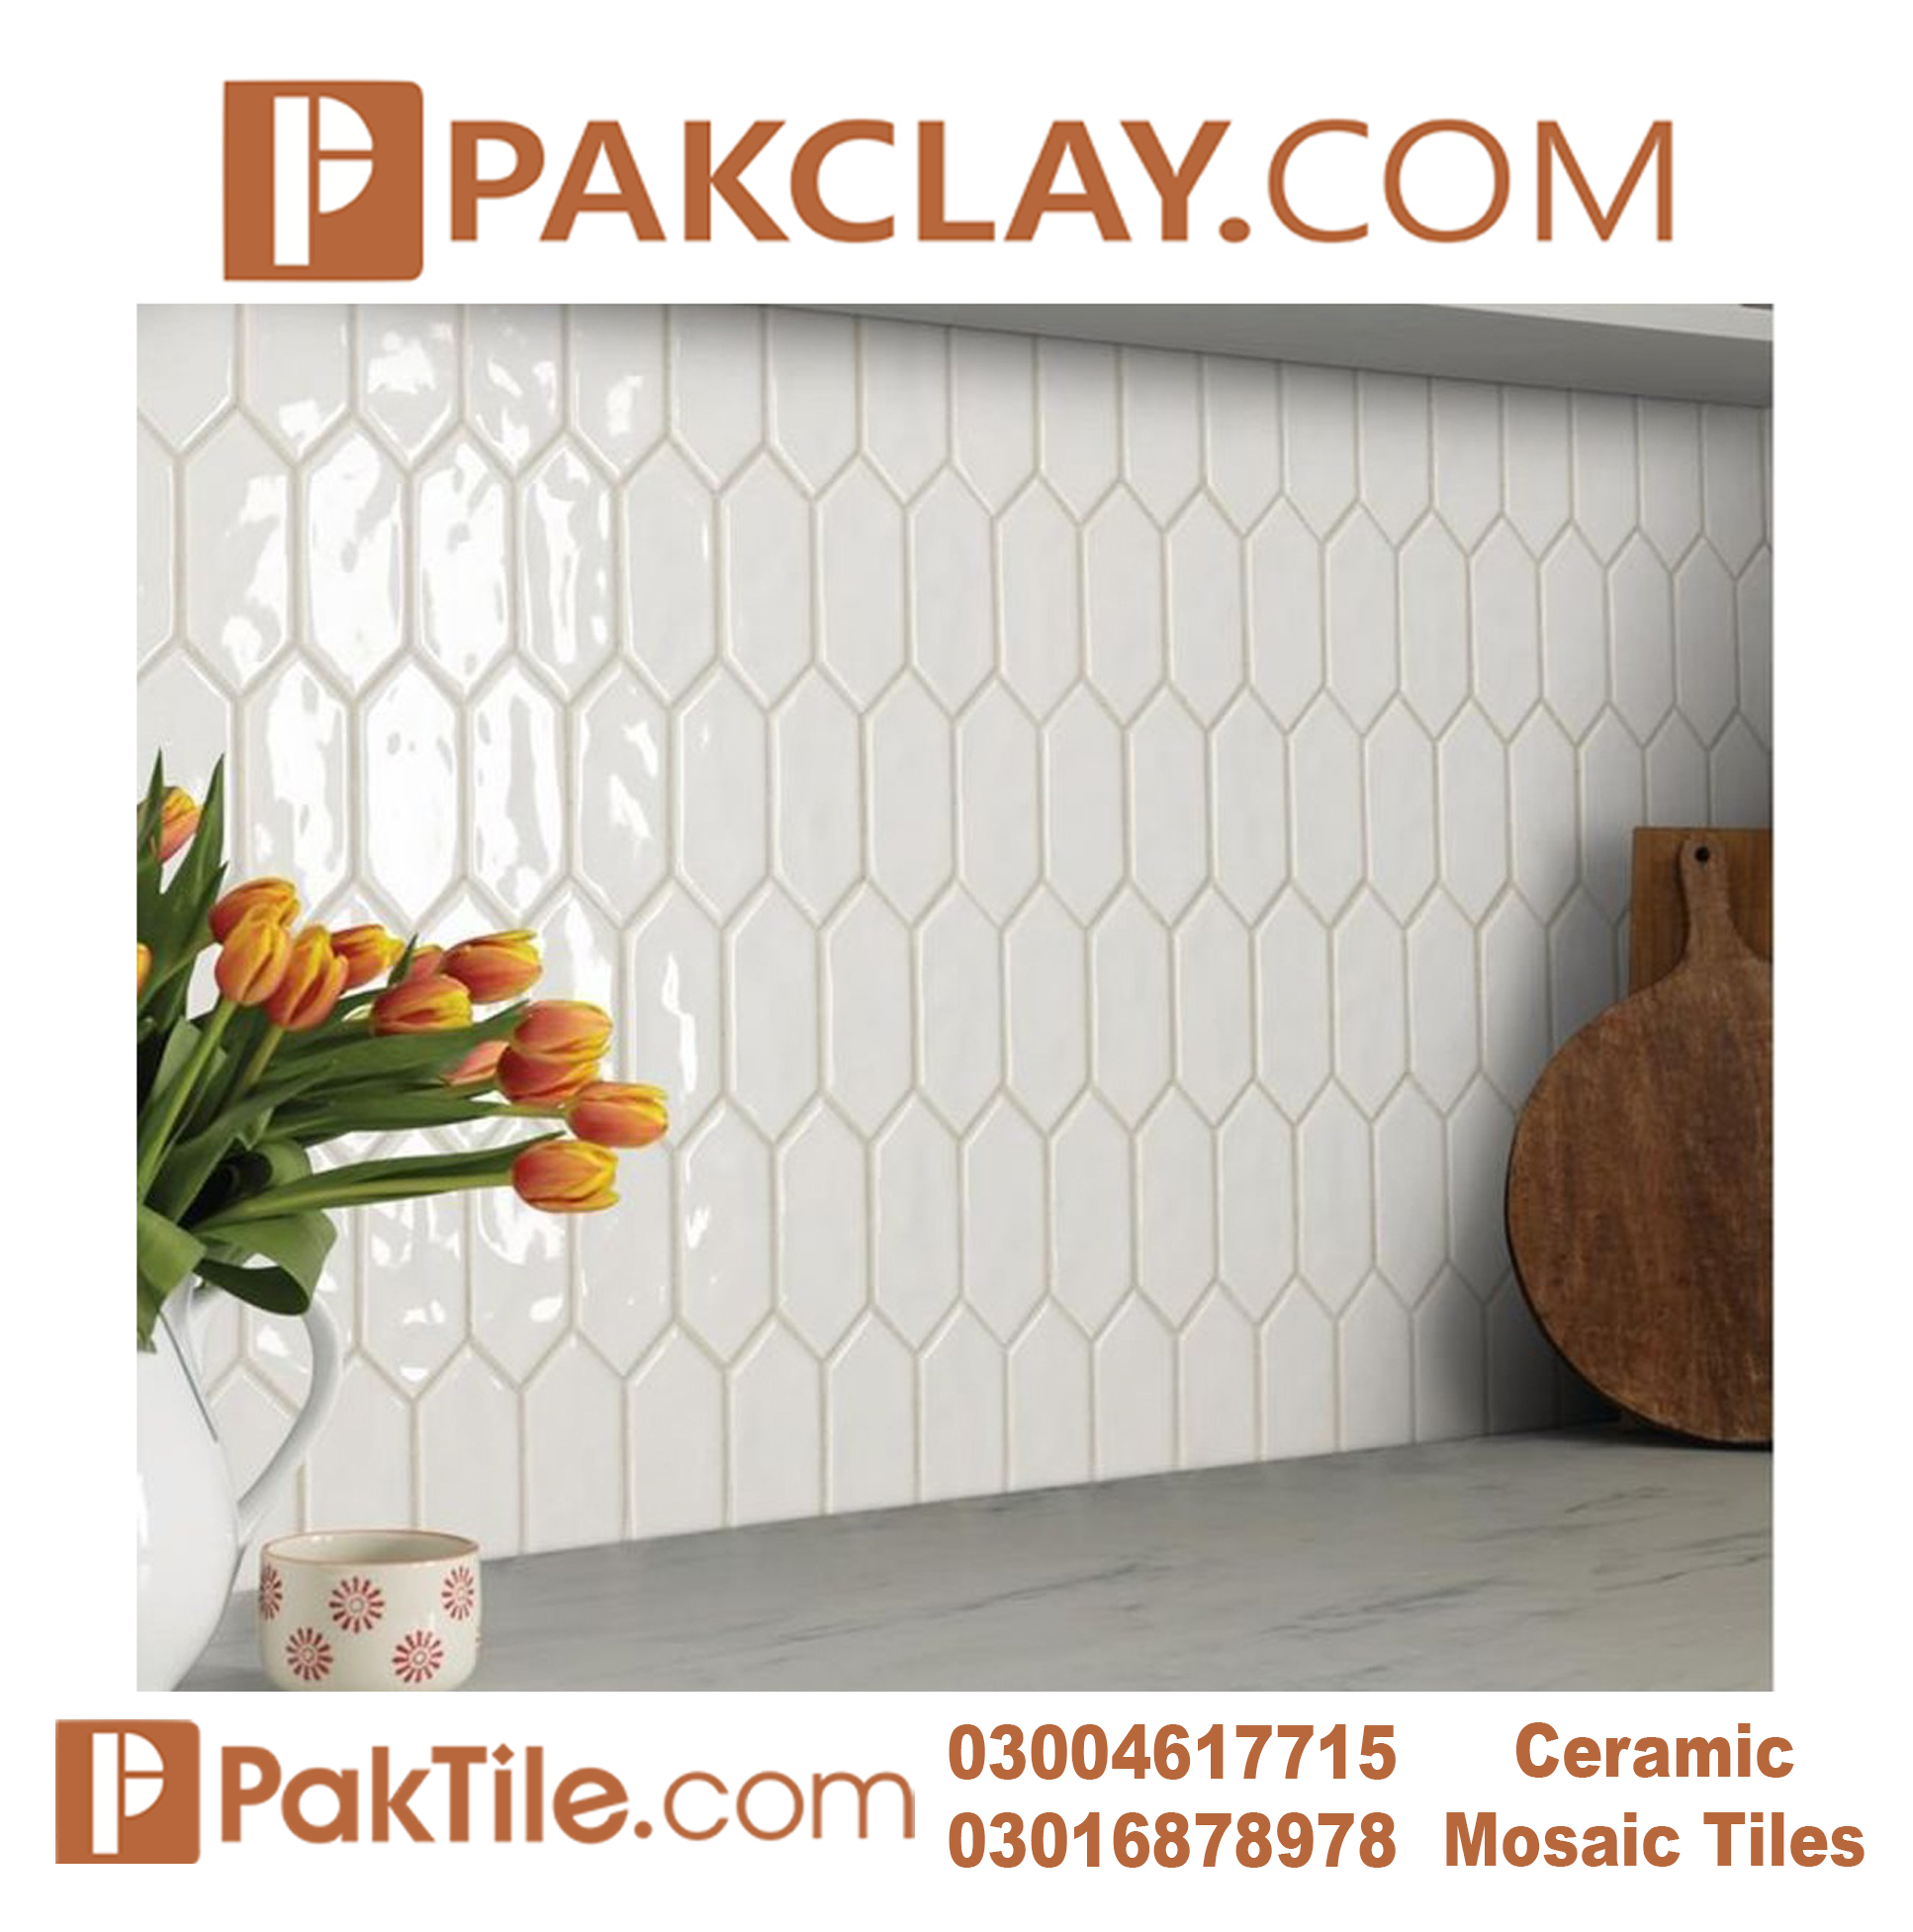 7 Ceramic Mosaic Tiles Price in Karachi.